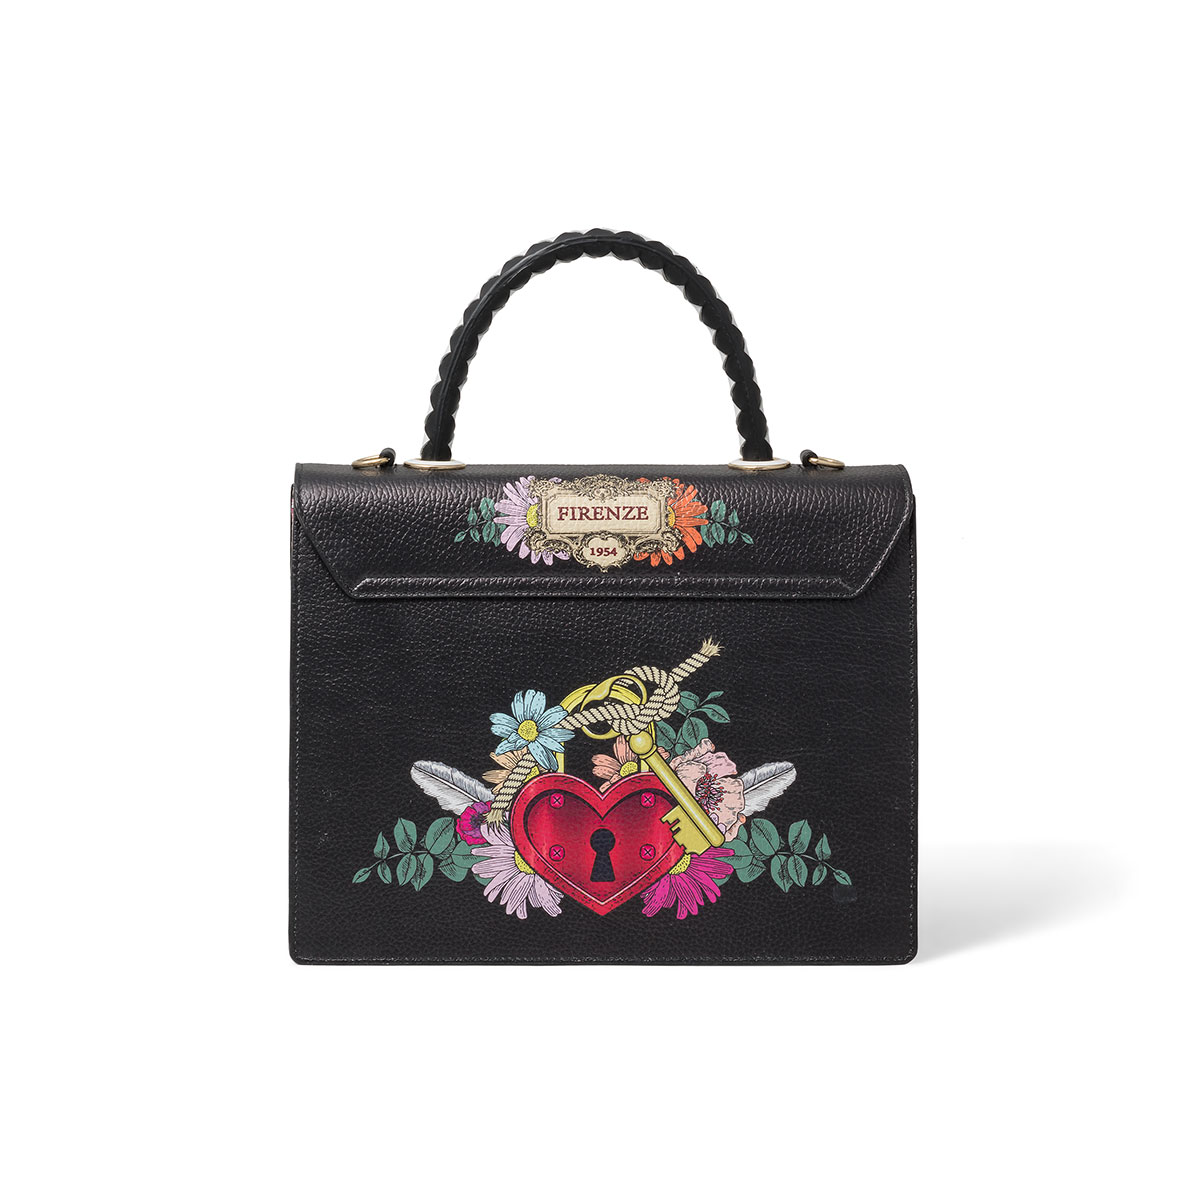 on Embroidery Flower Bag Boston leather handbags handbags women famous brand,Gray 